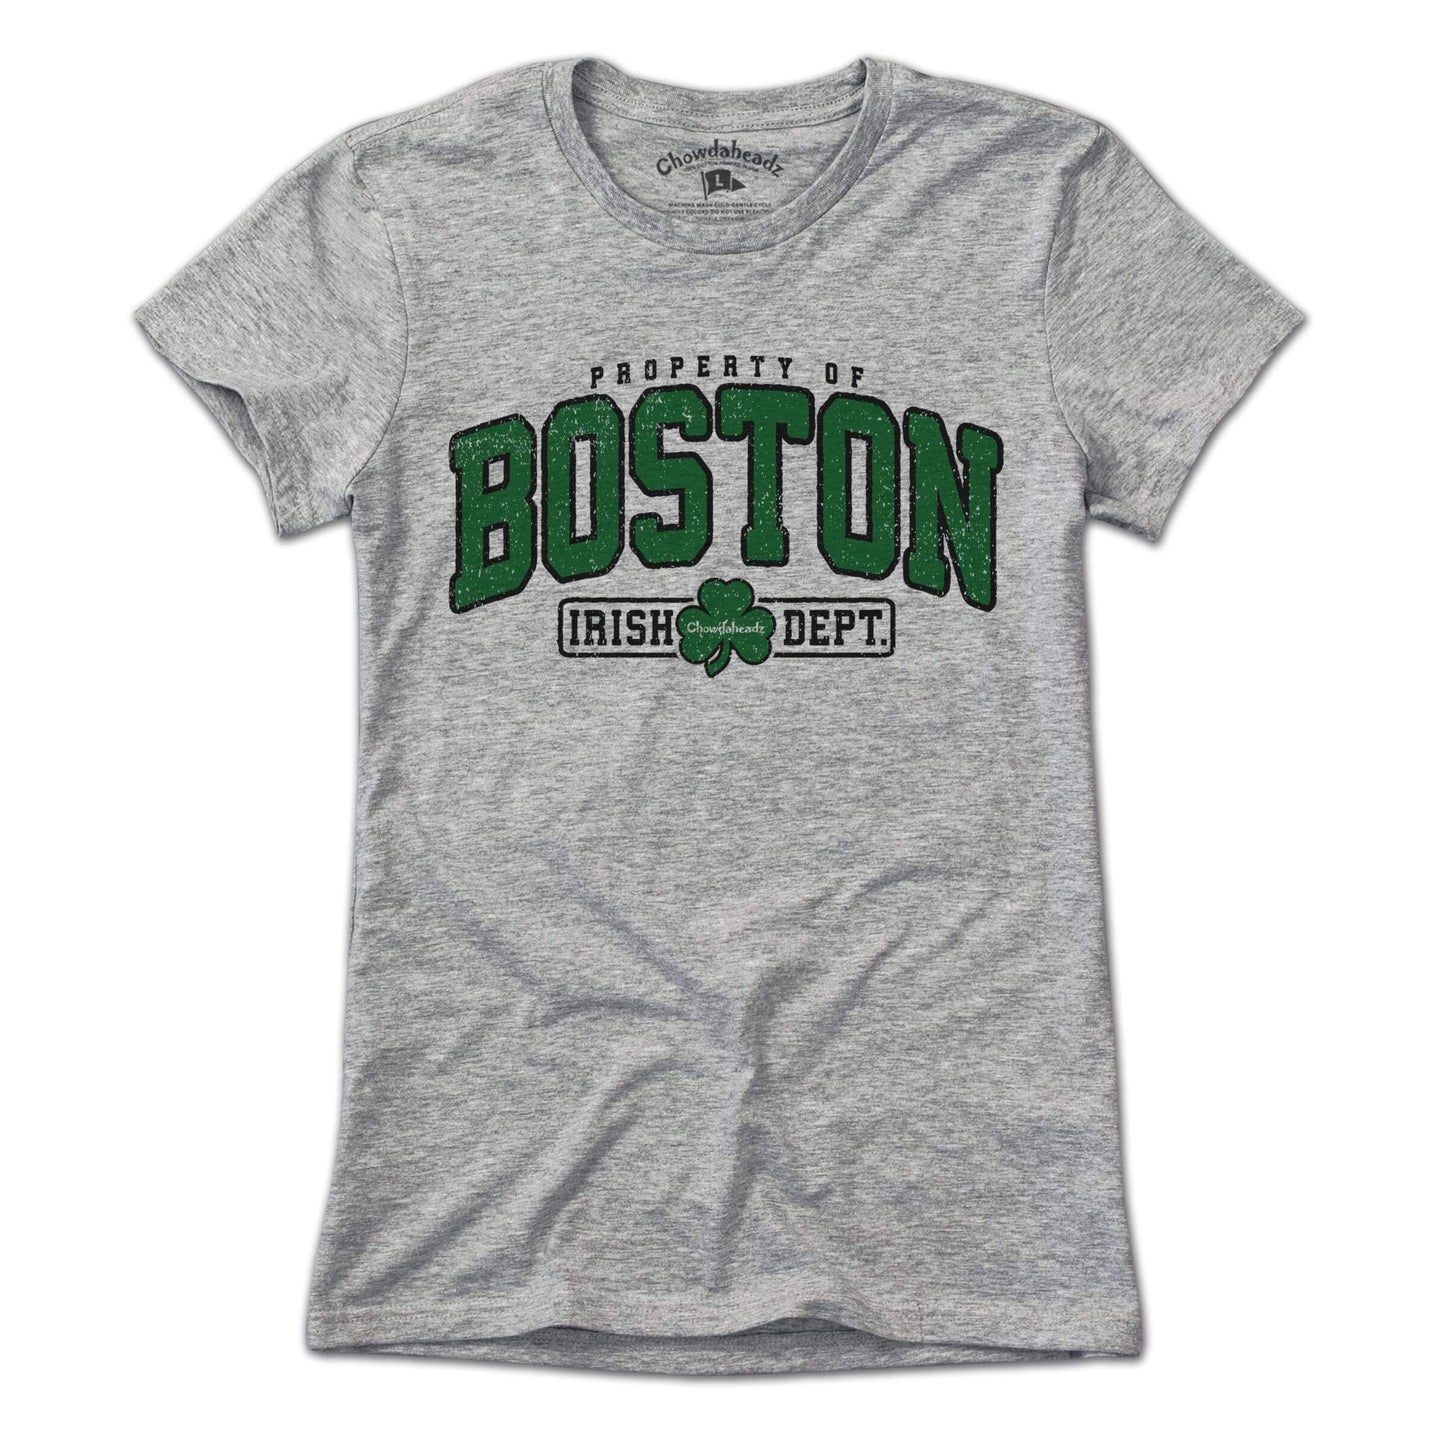 Property of Boston Irish Dept. T-Shirt - Chowdaheadz